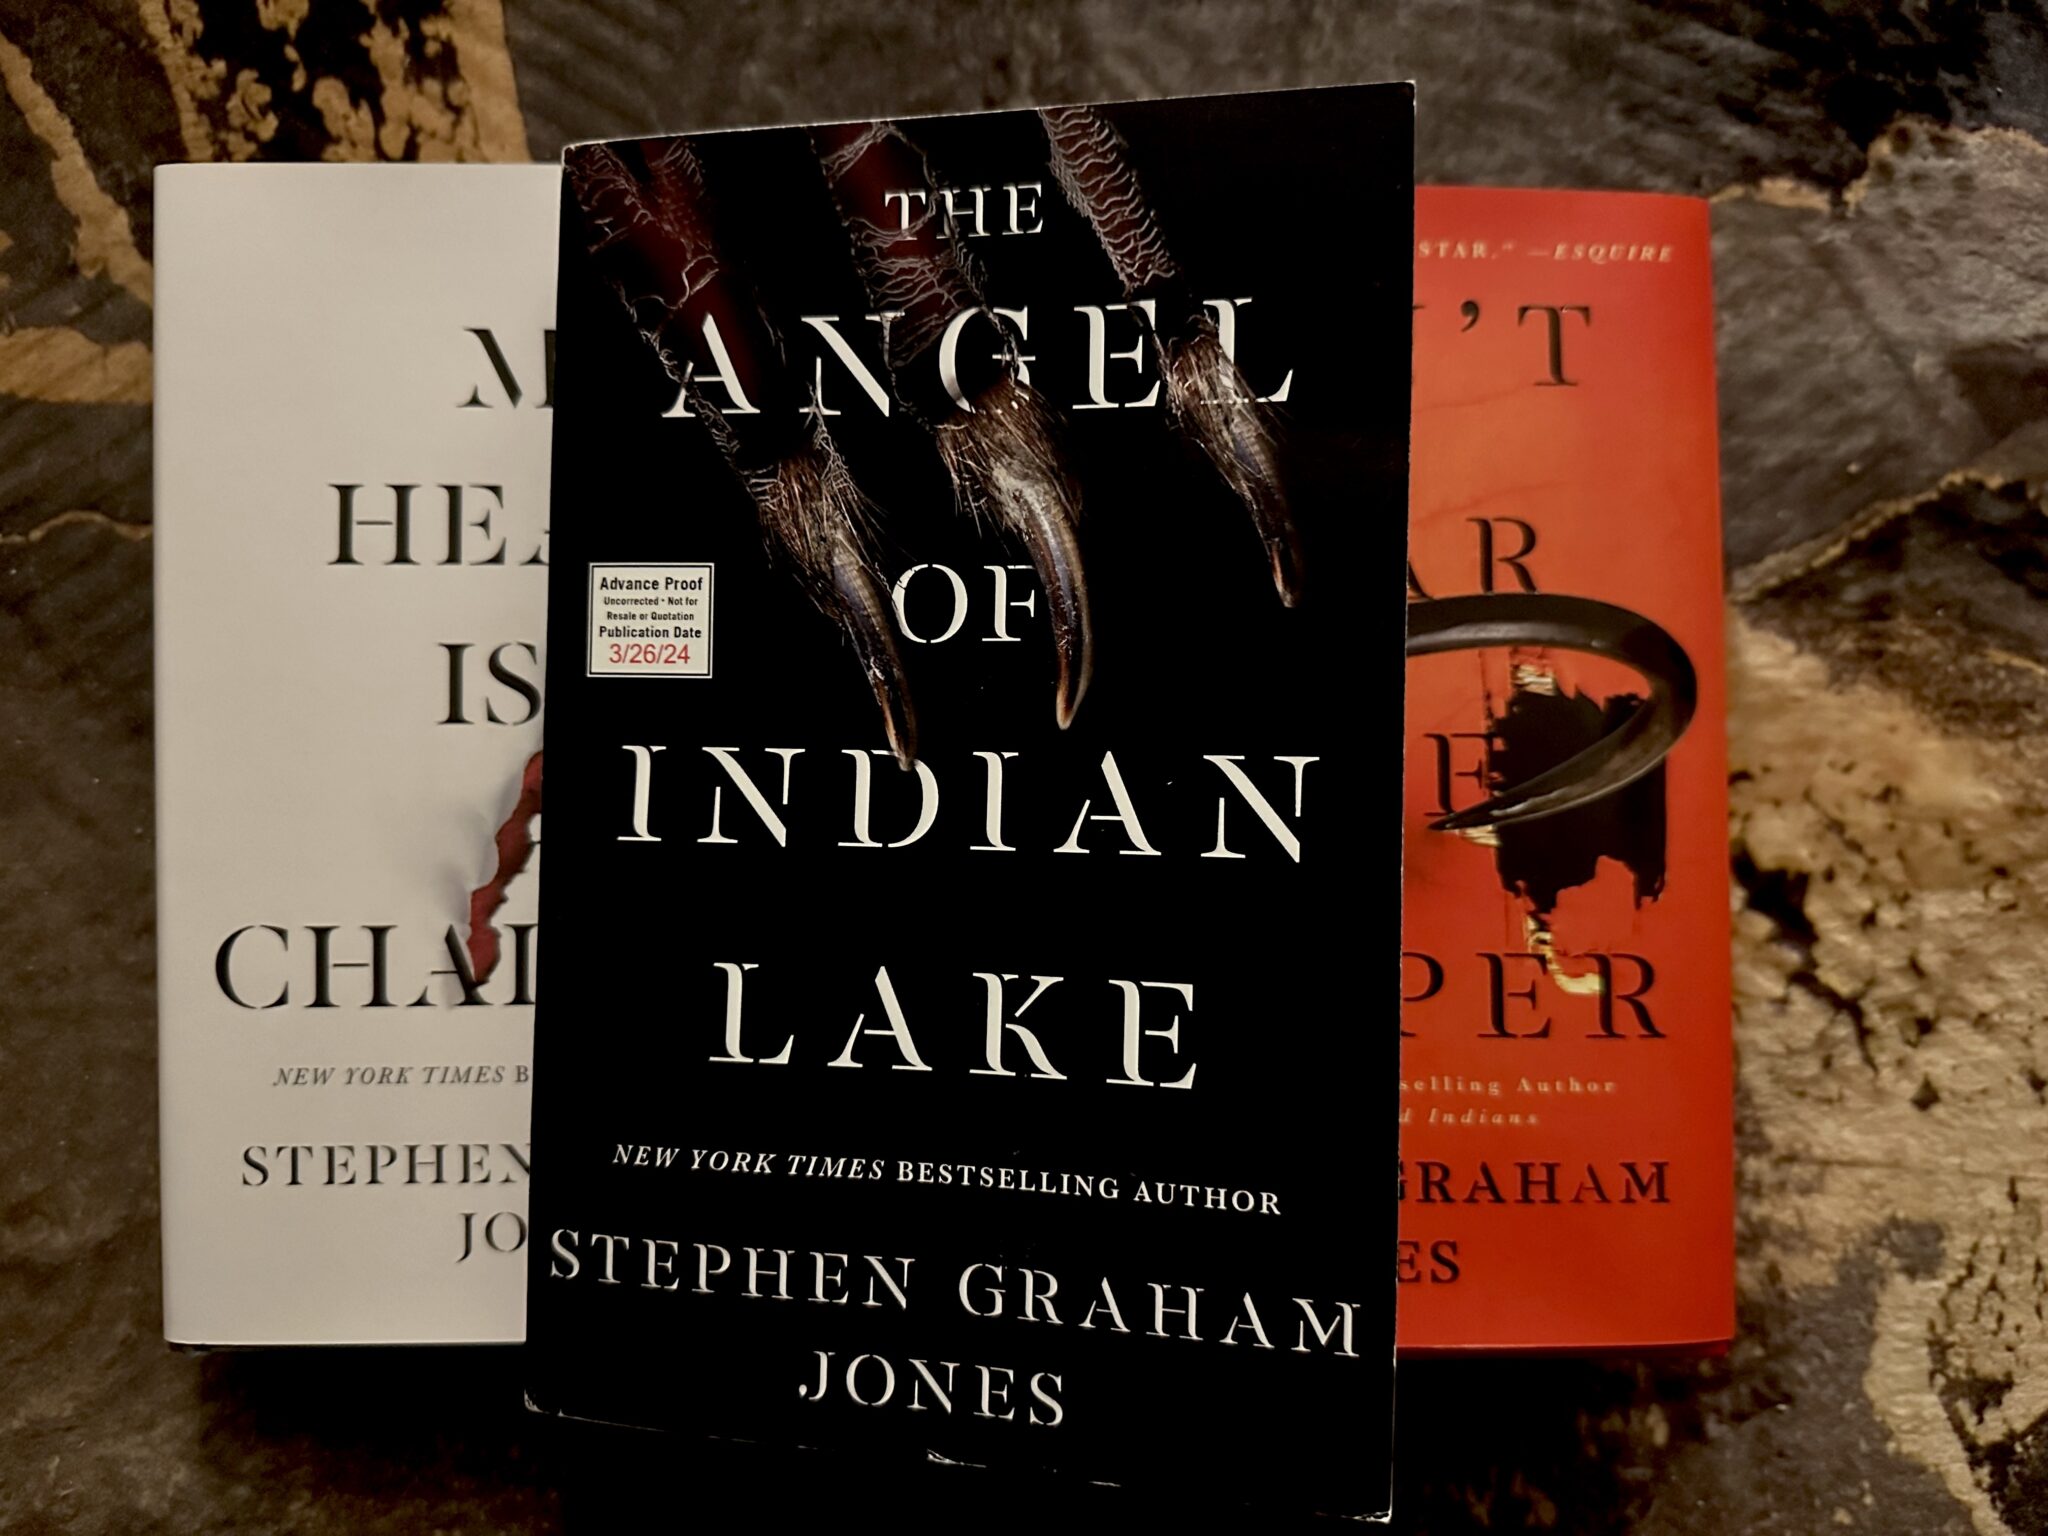 The Indian Lake Trilogy